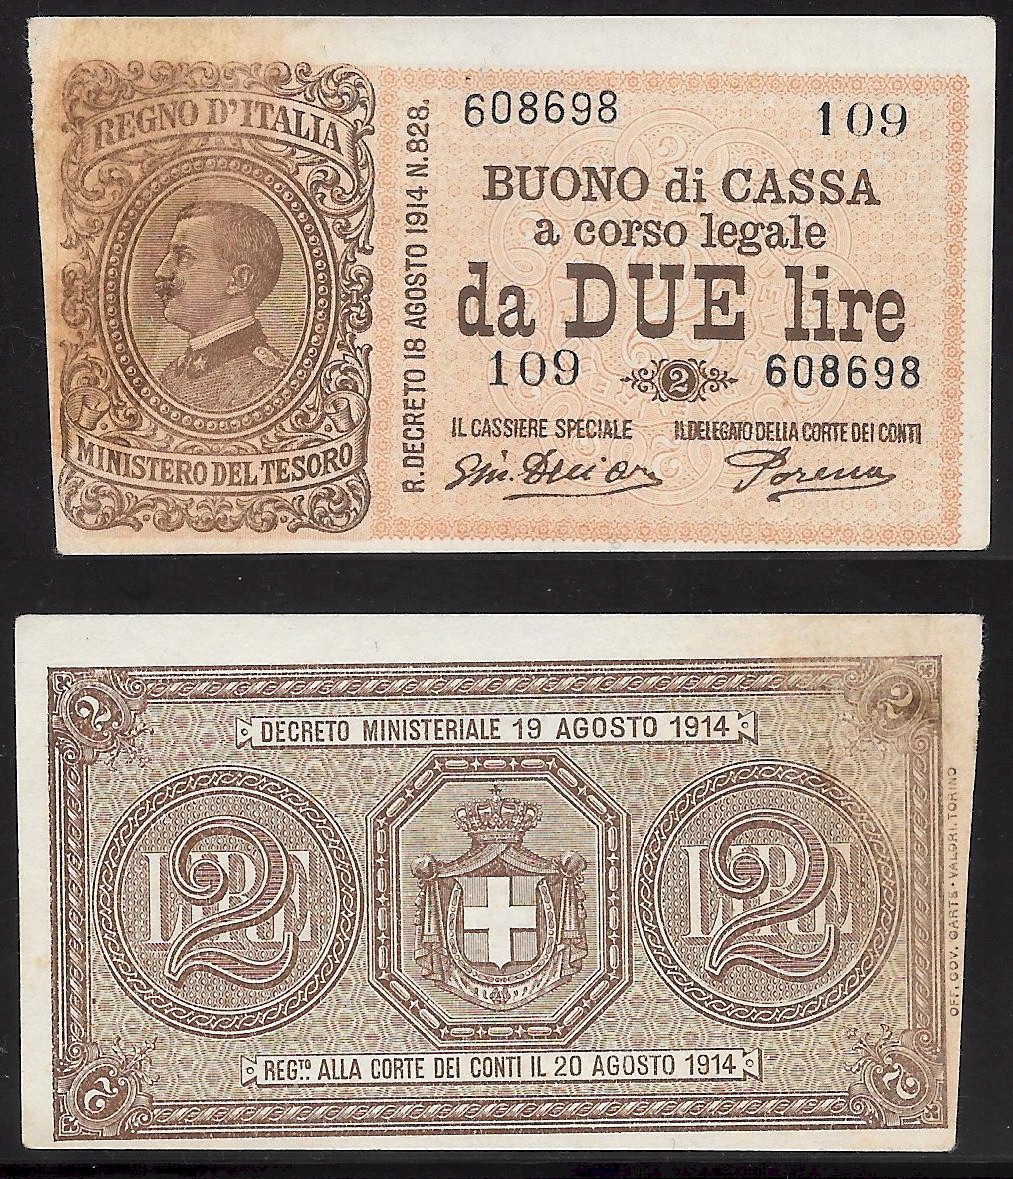 Vittorio Emanuele III - due lire - retro stemma sabaudo - dec. min. 14-03-1920 